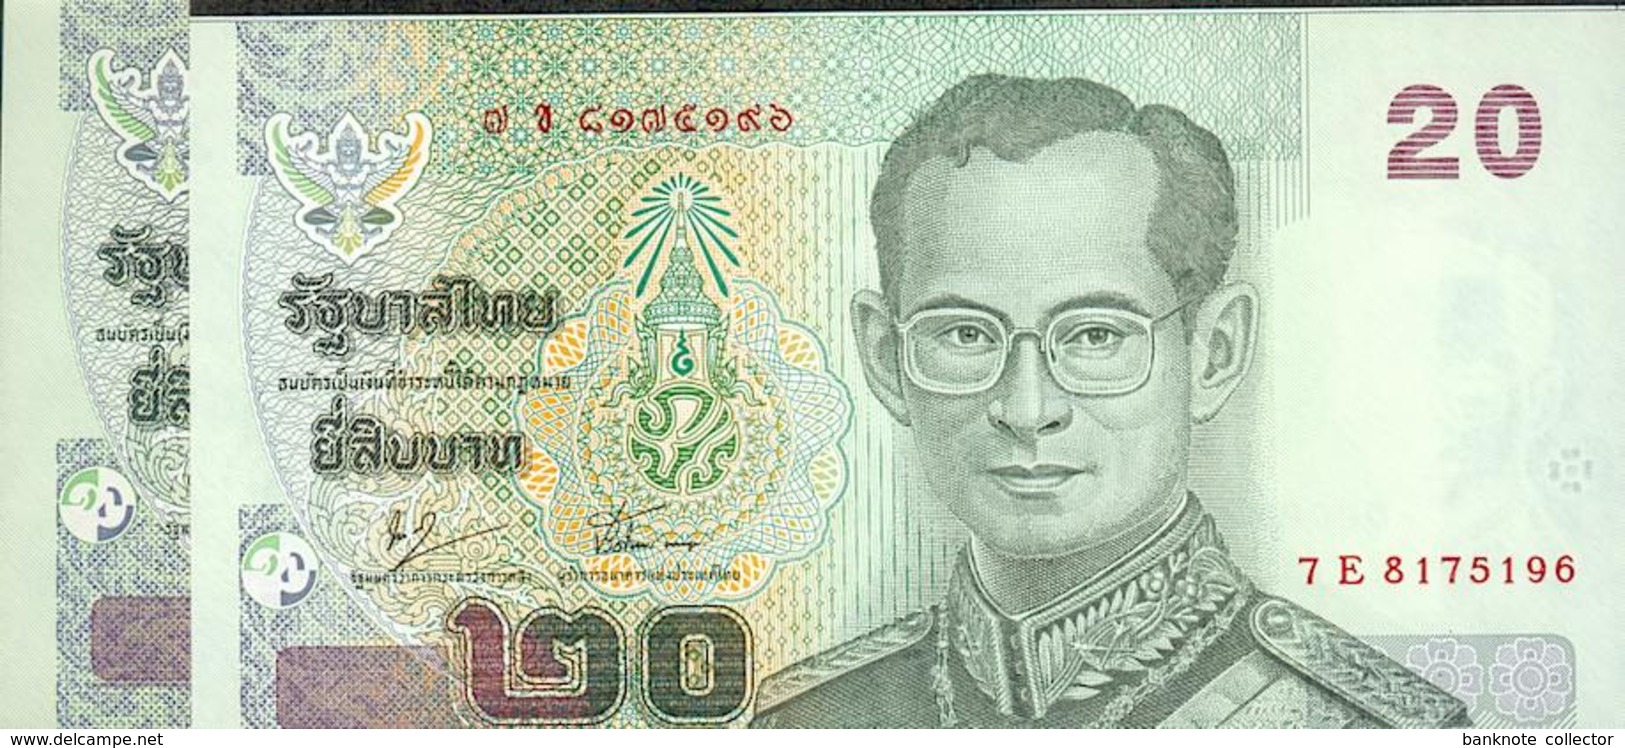 Thailand, 20 Baht, Pick 109, sign. 76, Fehlschnitt - error note - wrong cutting, UNC !